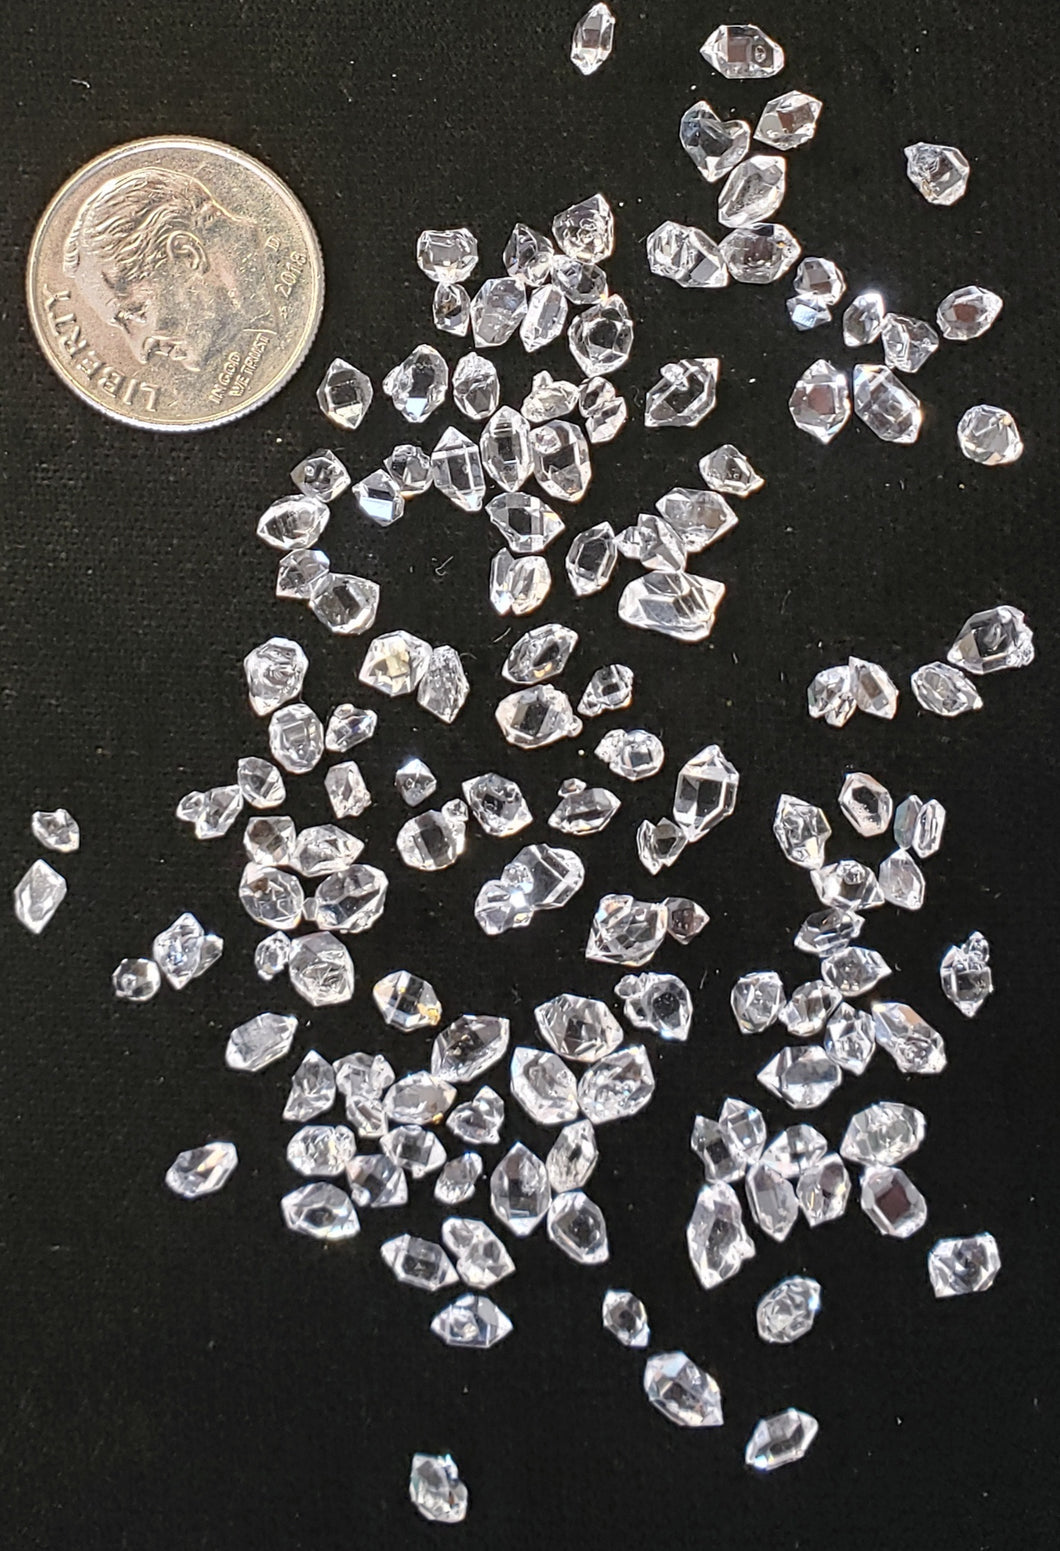 Herkimer Diamond - Very Small